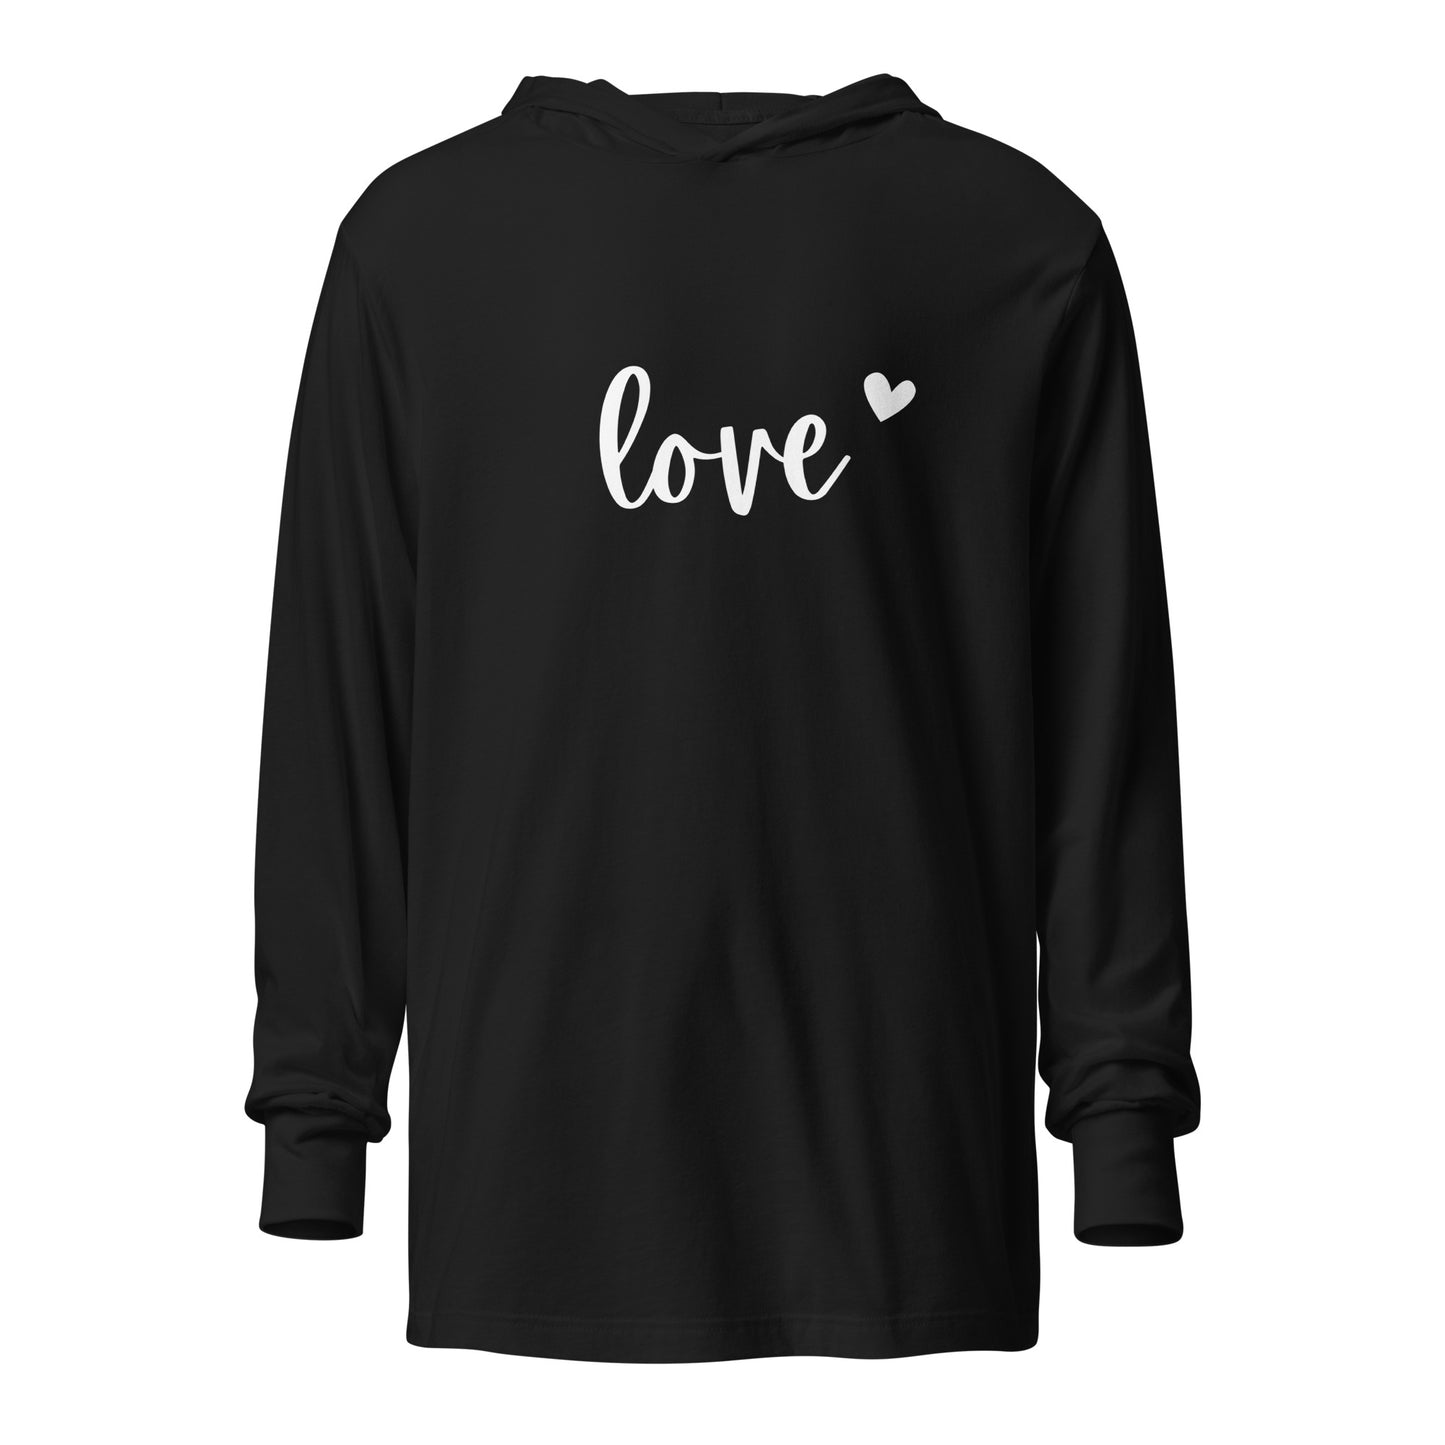 Love Heart | Knqv | Loving gift for family, loved ones, valentines day, Hooded long-sleeve tee